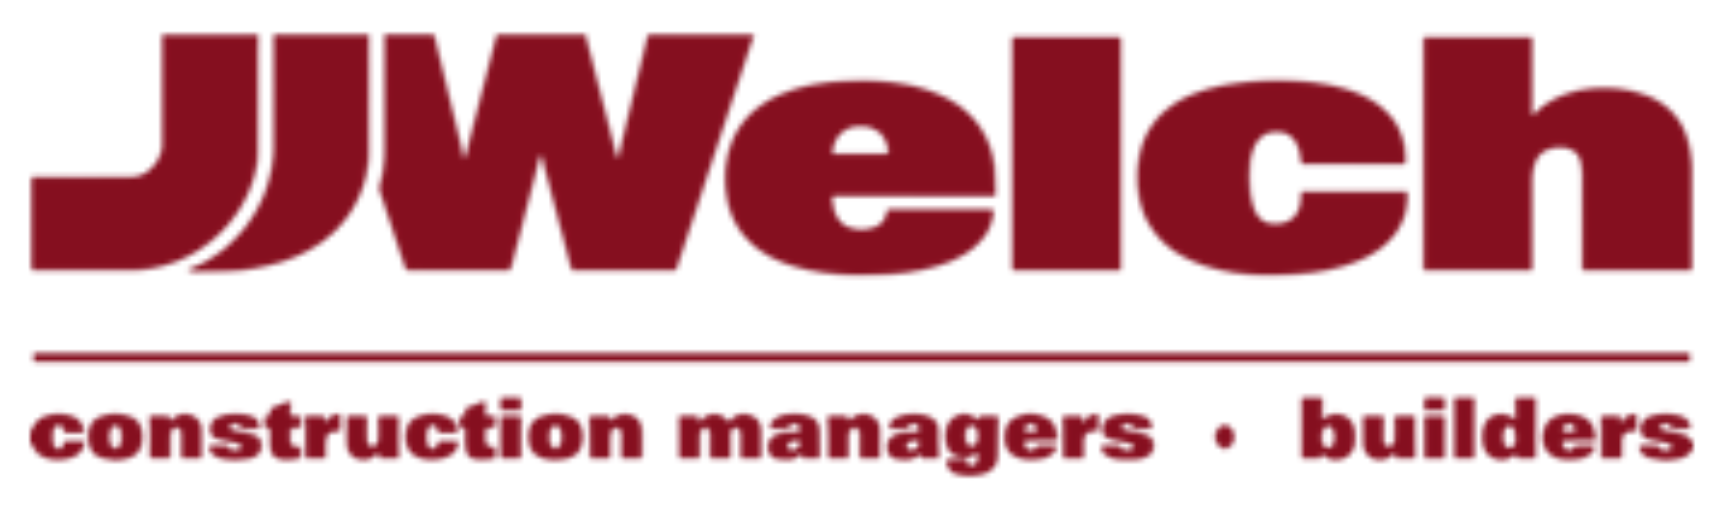 JJWelch Logo